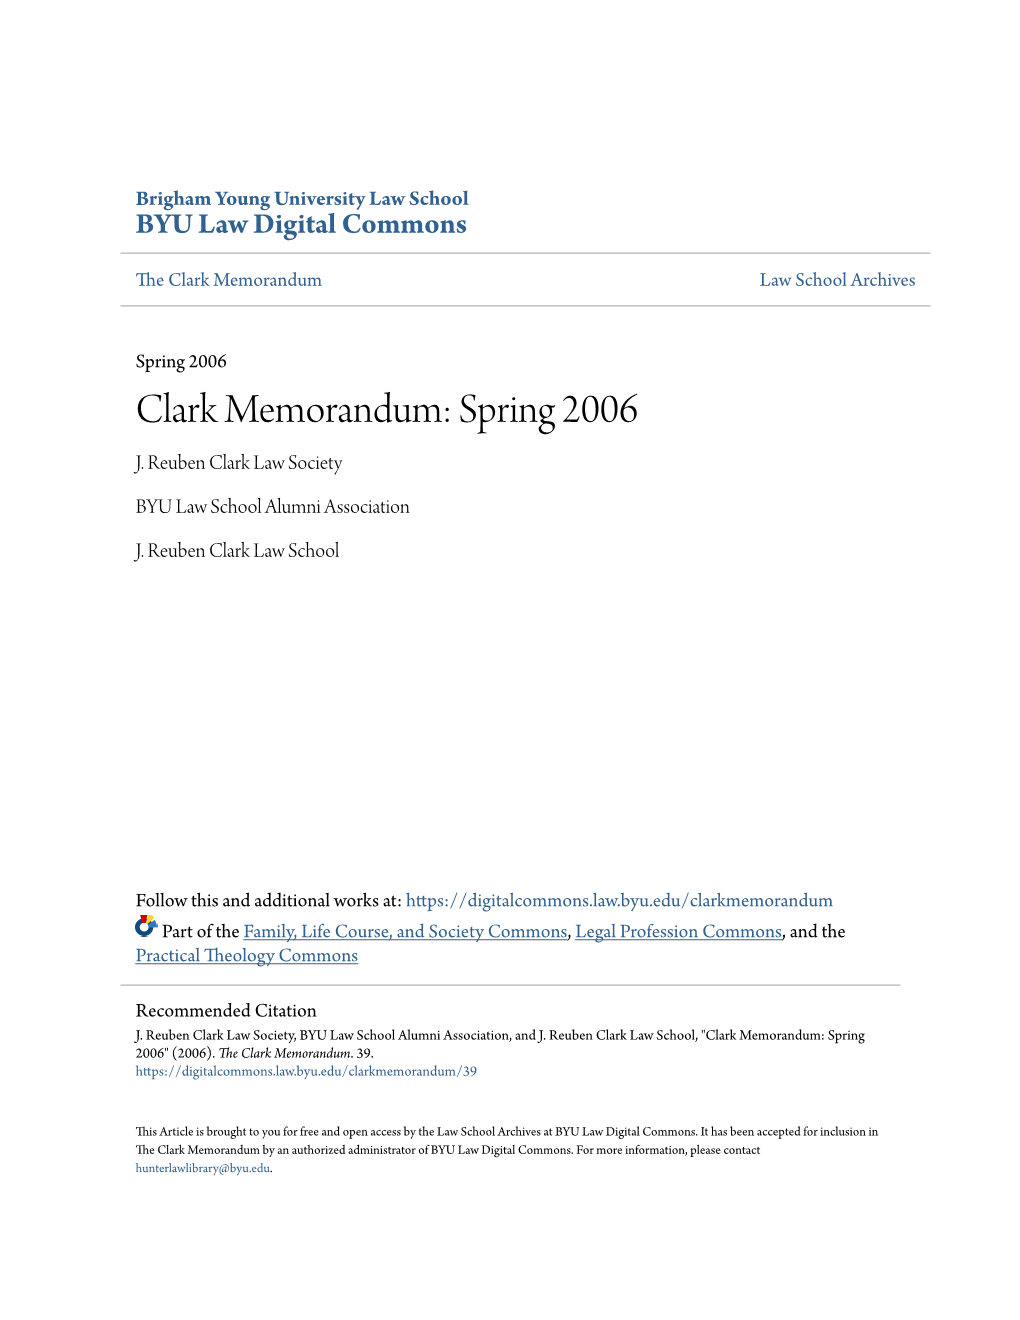 Clark Memorandum: Spring 2006 J